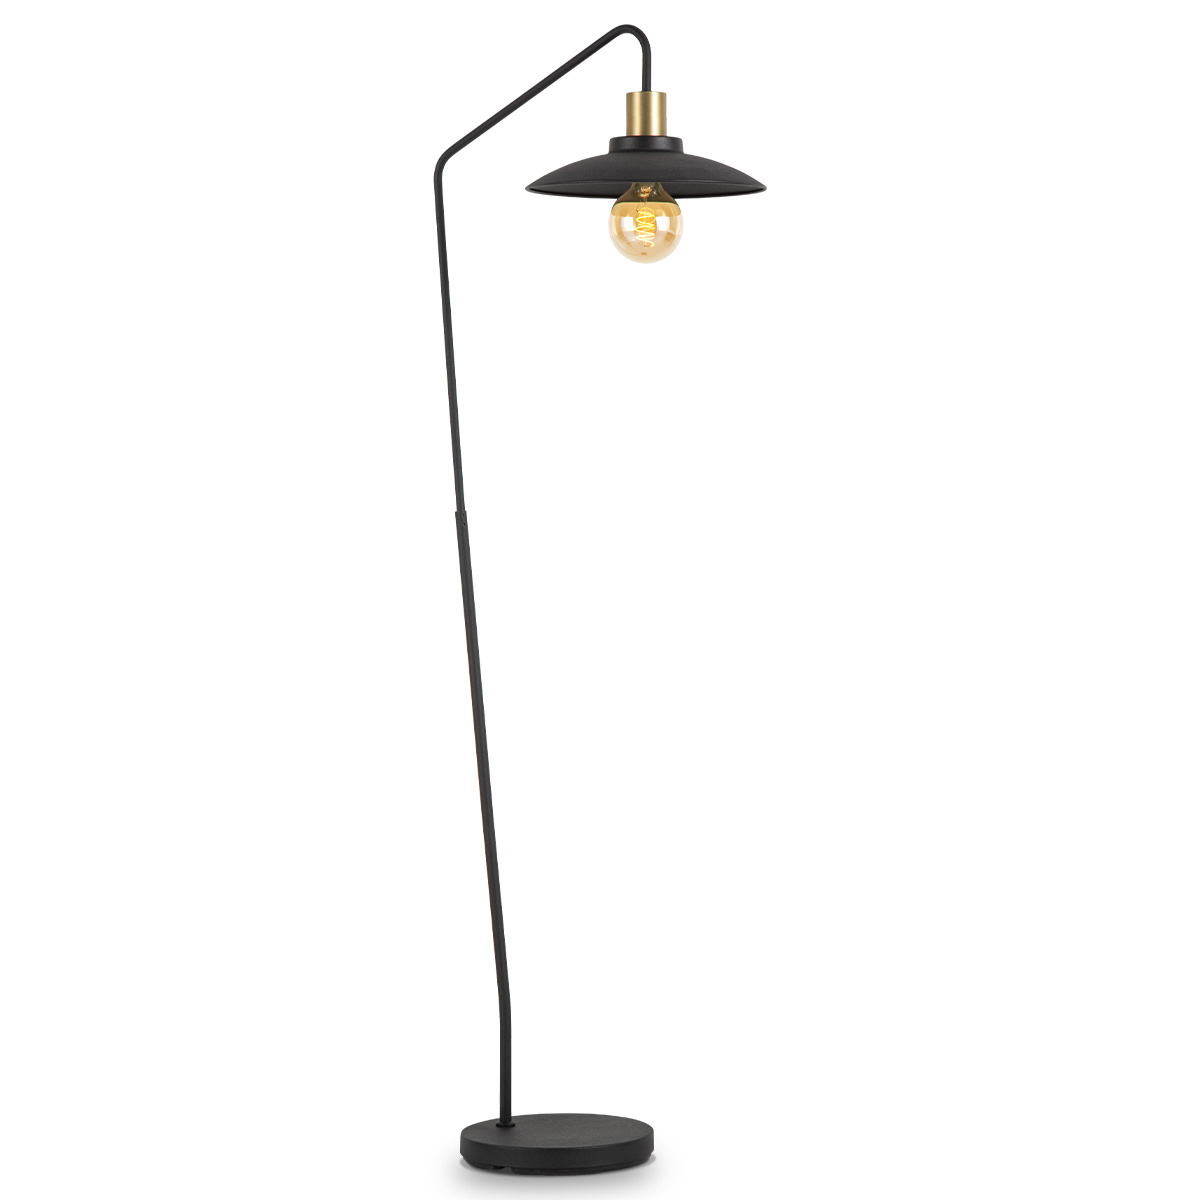 Tangla lighting - TLF7655-01SB - LED floor lamp 1 light - metal decorative lighting - modern - black cirque series